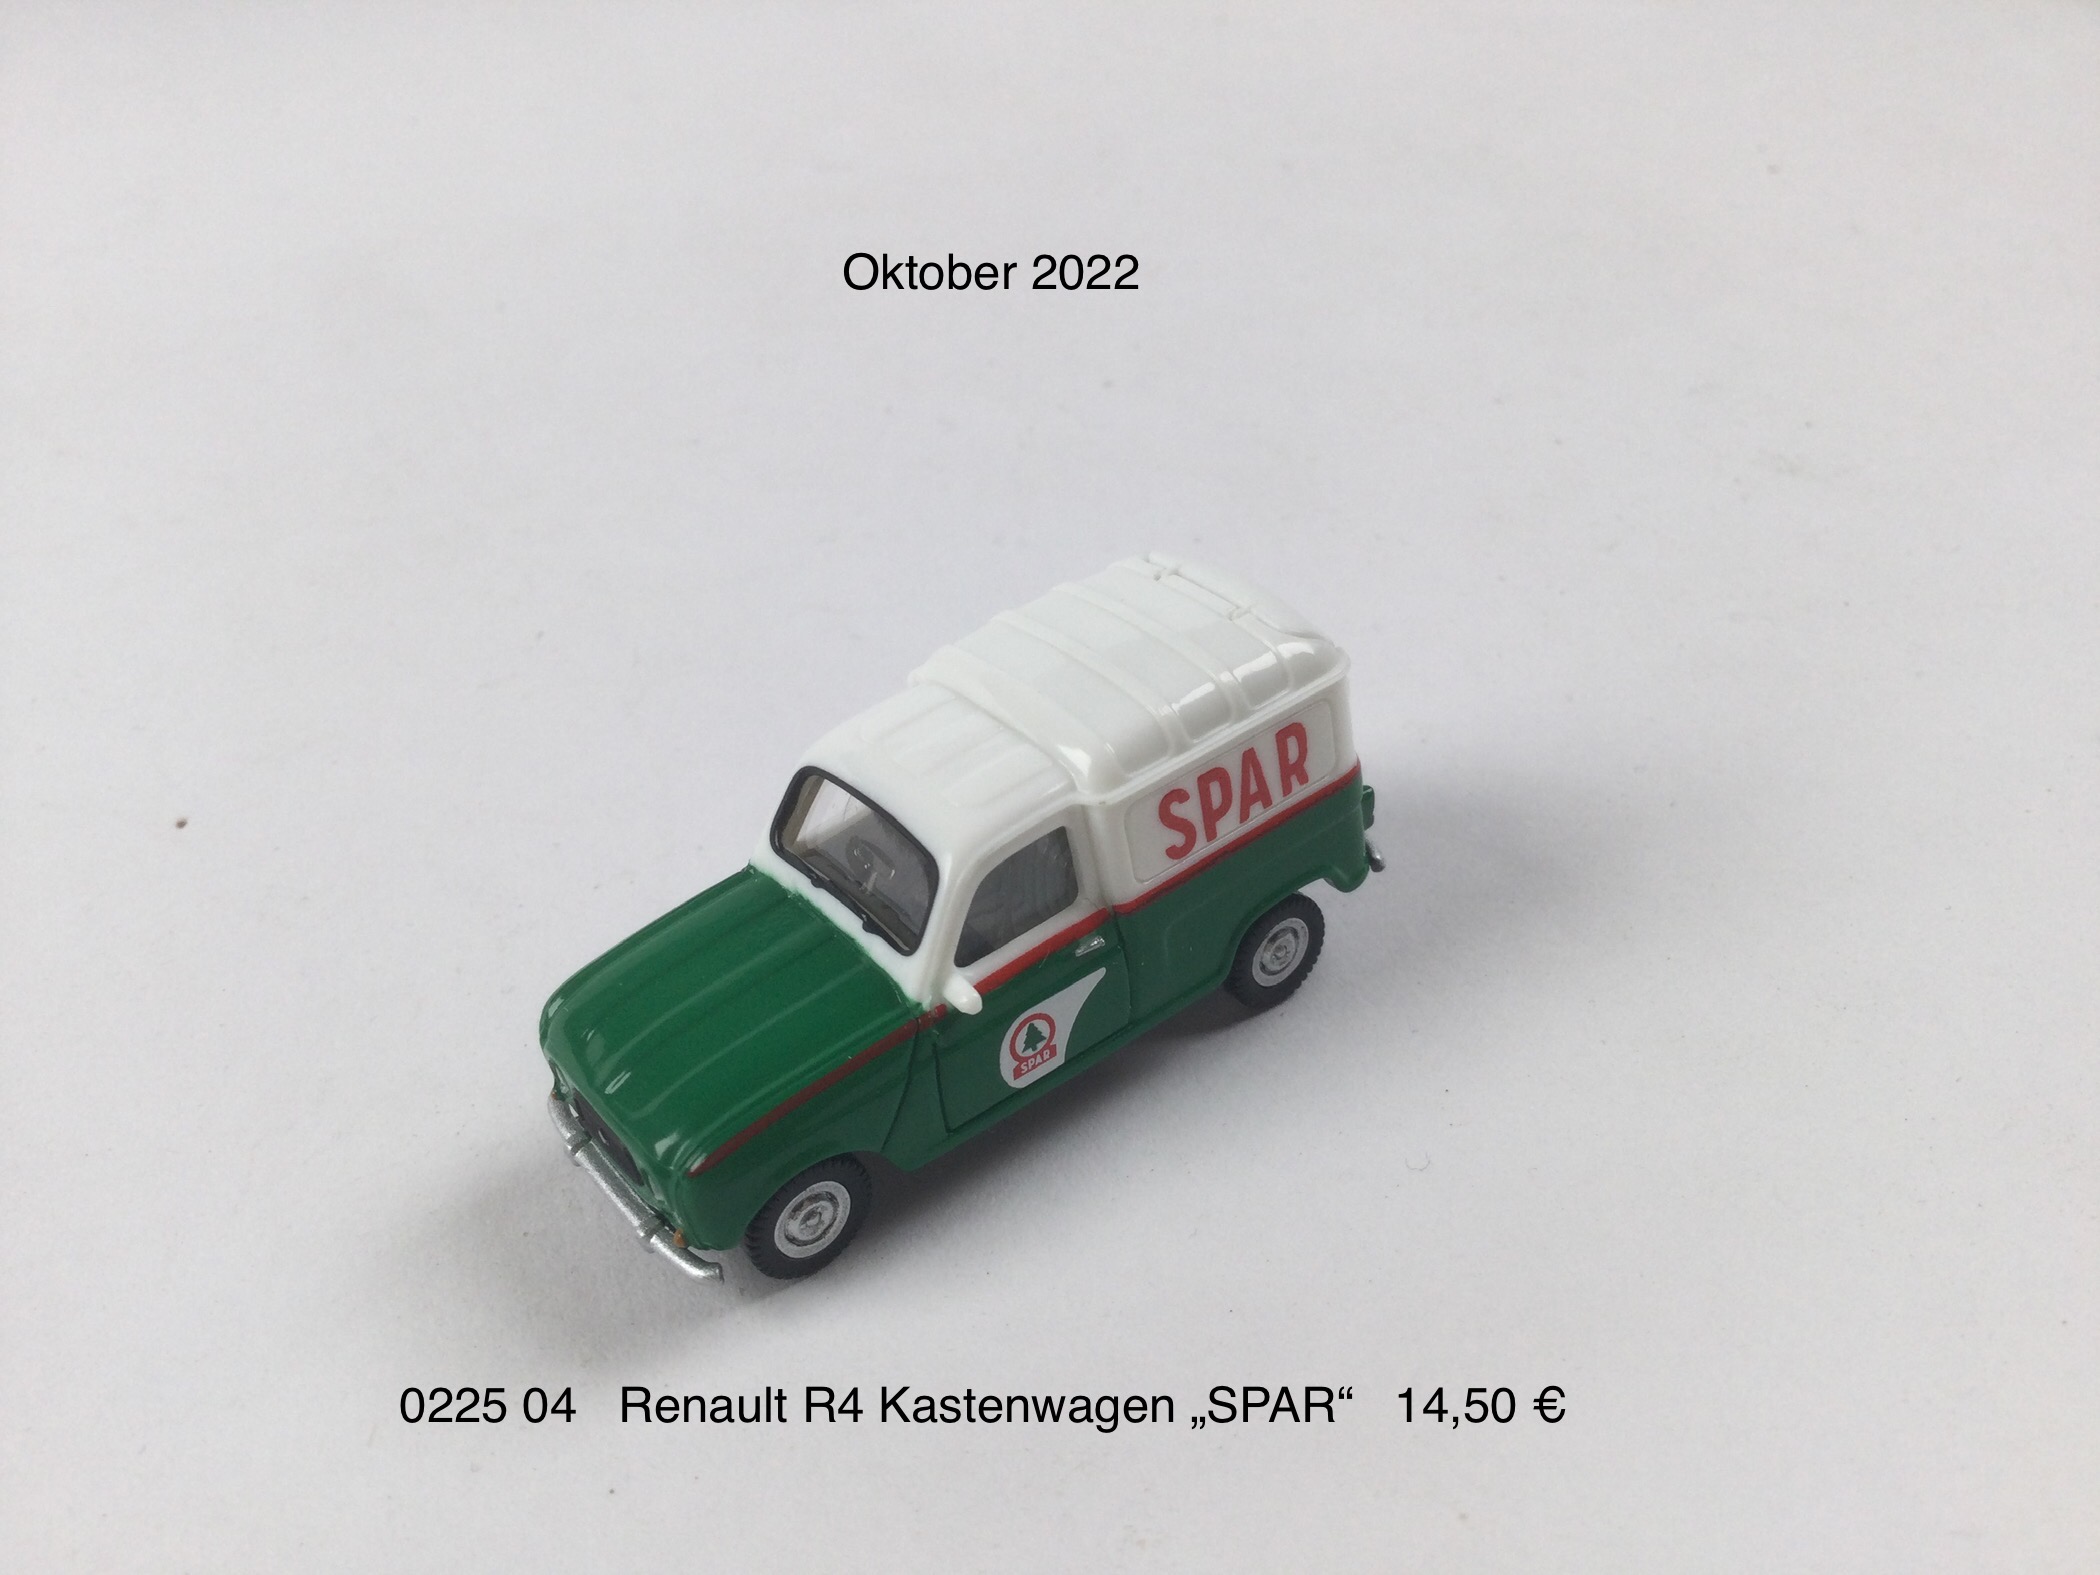 Renault R4 Kastenwagen "Spar"